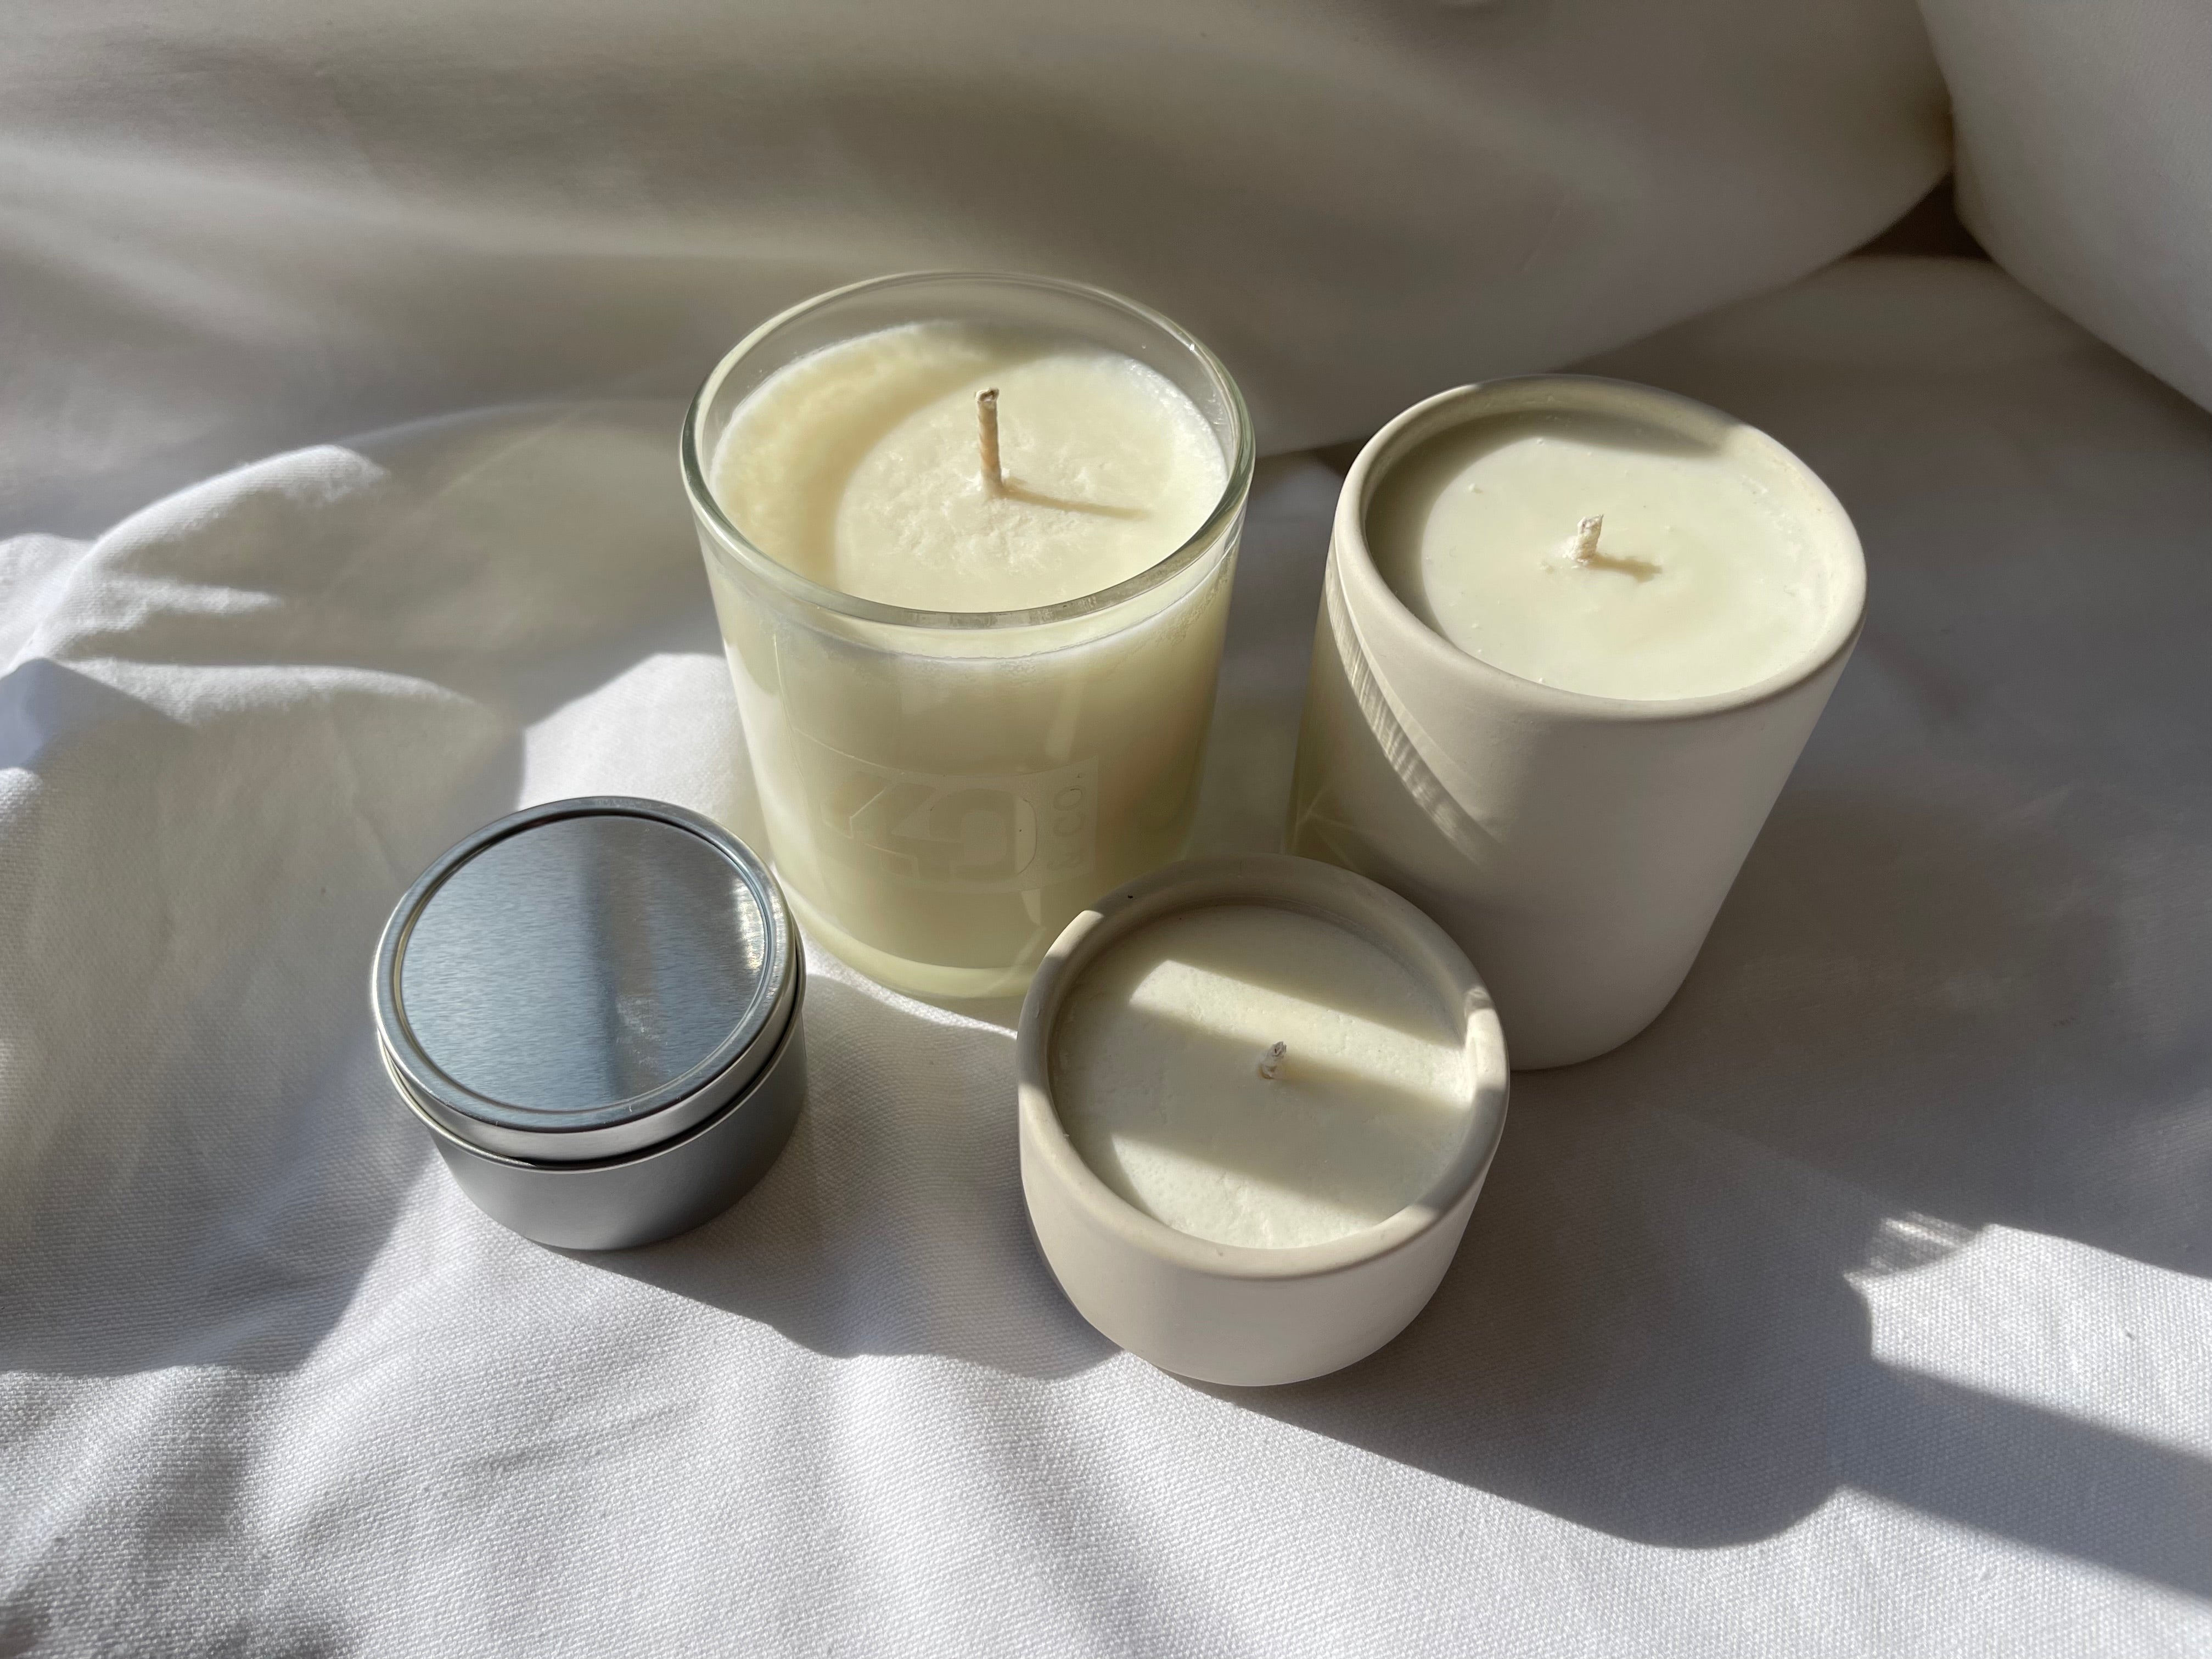 scottsdale candle | multiple options